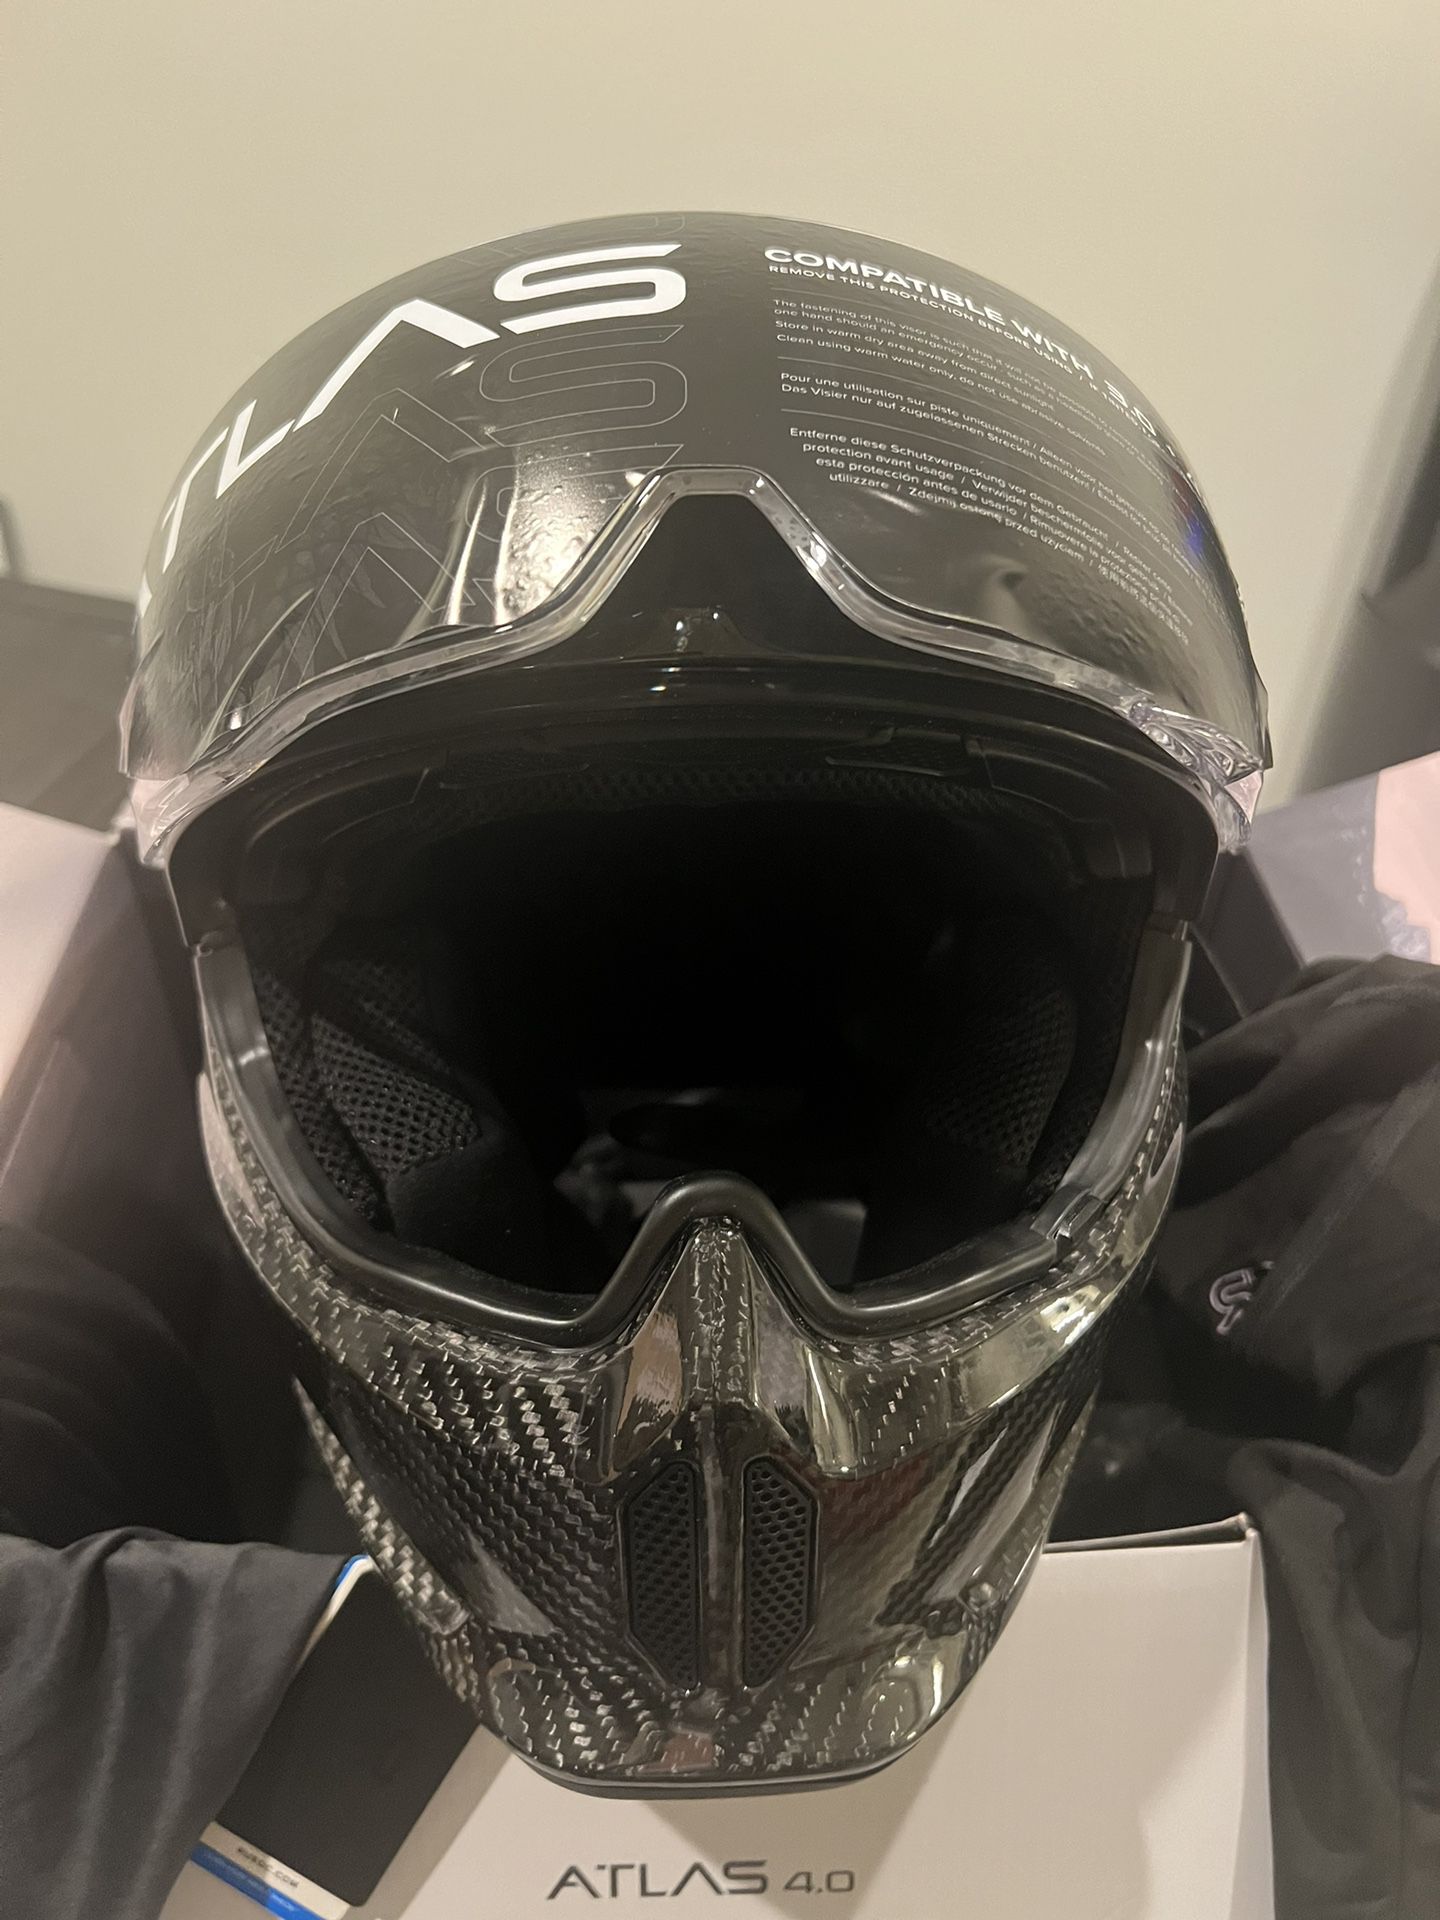 Ruroc Motorcycle Helmet With Sound Brand New 